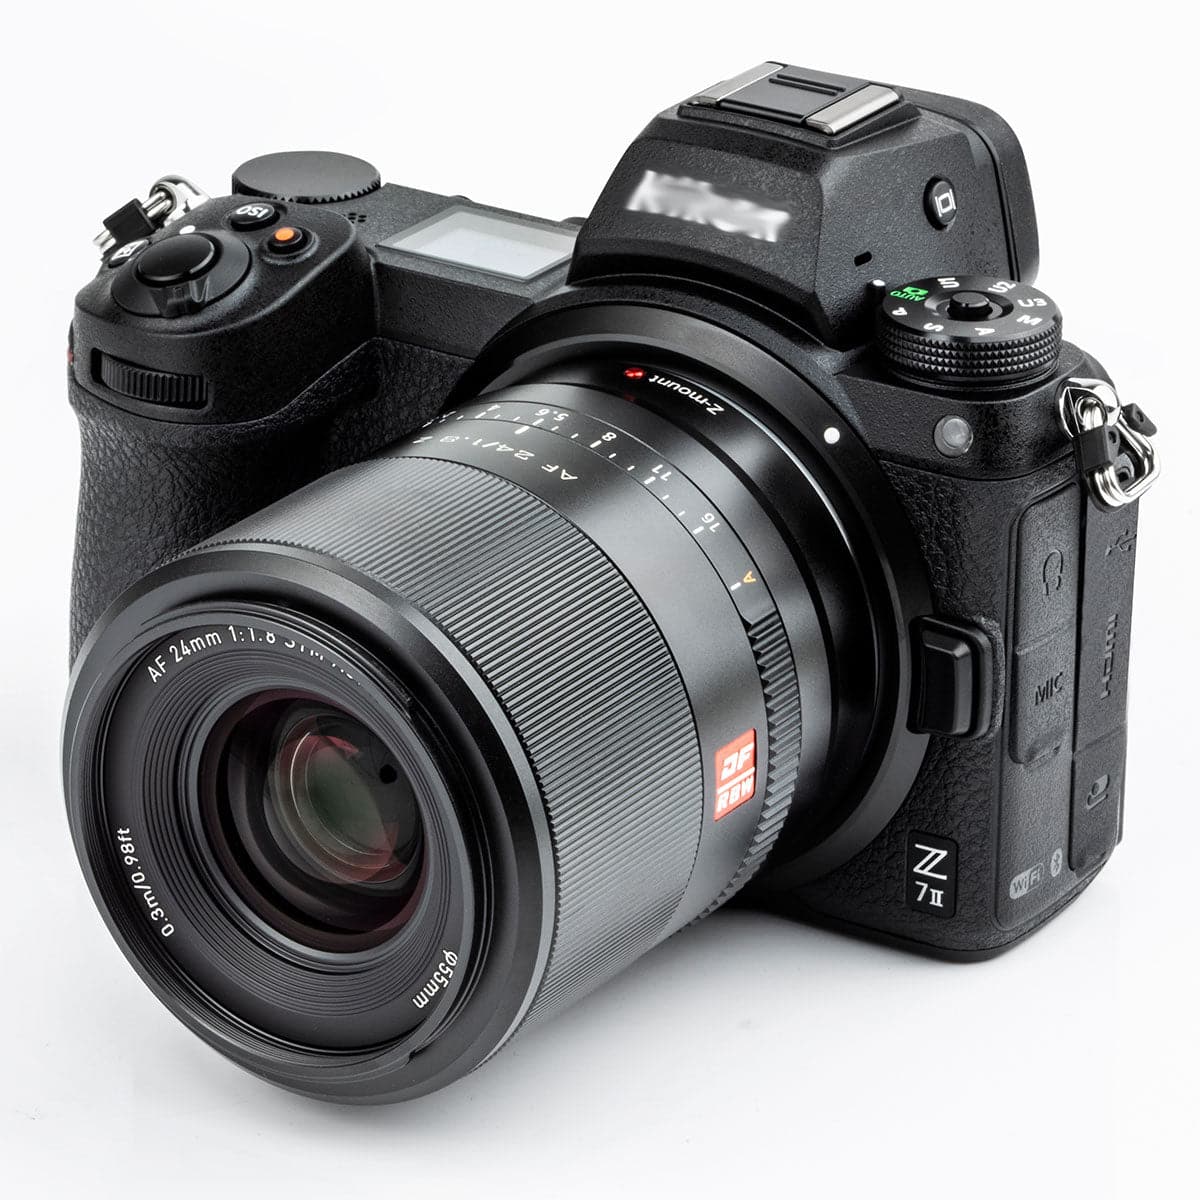 Viltrox AF 24mm F1.8 Z Full-frame Wide Angle Lens for Nikon Z-mount Mirrorless Camera Suitable for Landscape Portrait Astrophotography Architecture